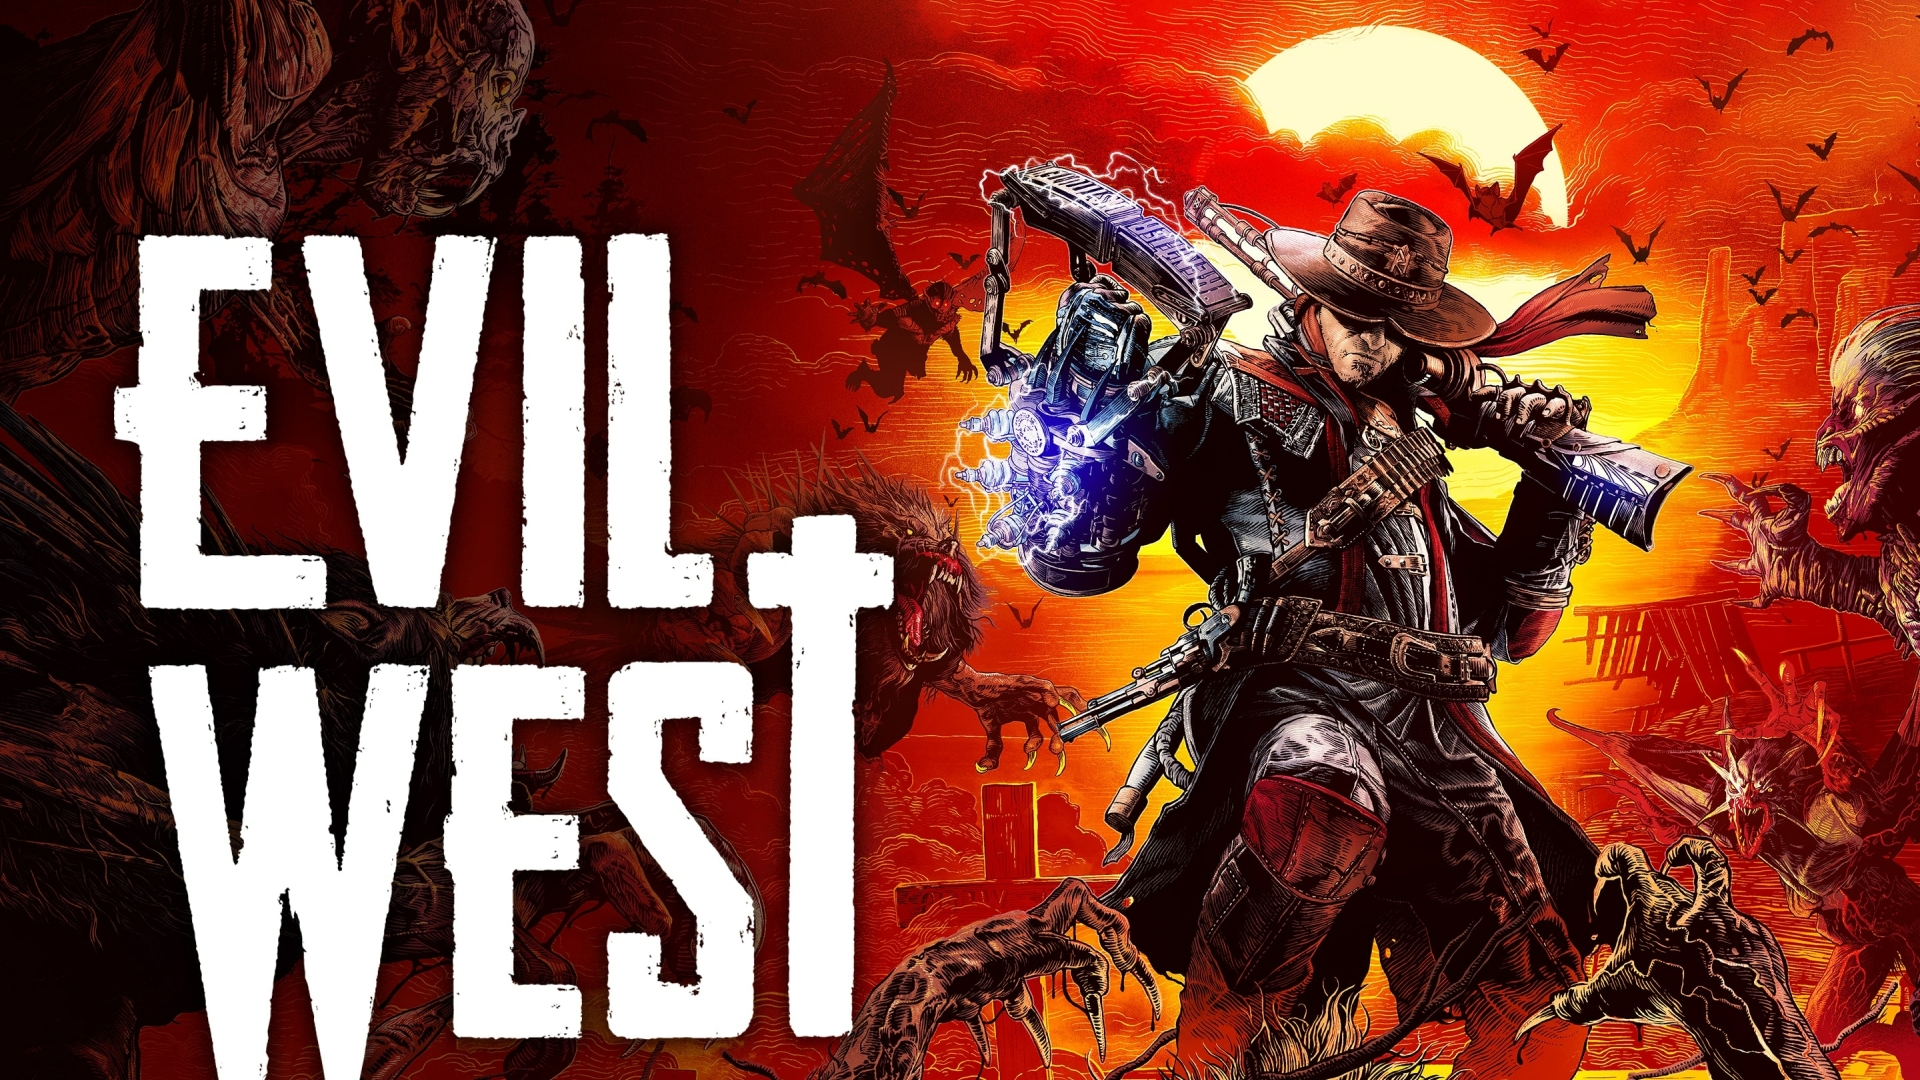 Evil West Xbox One/ Series XS Digital Online - XBLADERGAMES